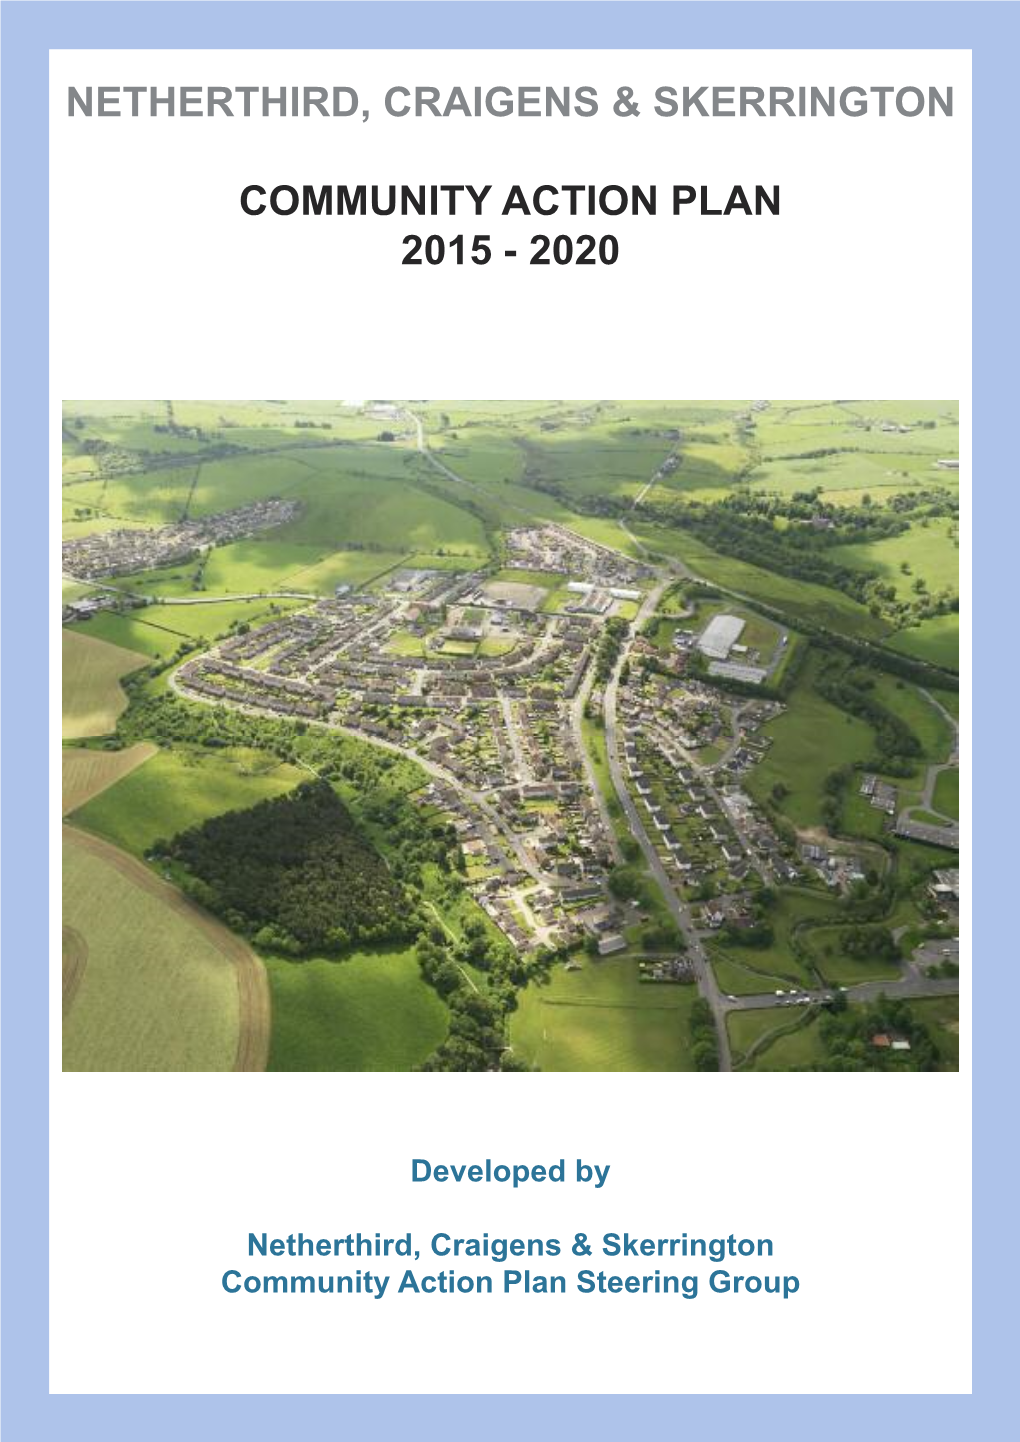 Netherthird, Craigens & Skerrington Community Action Plan